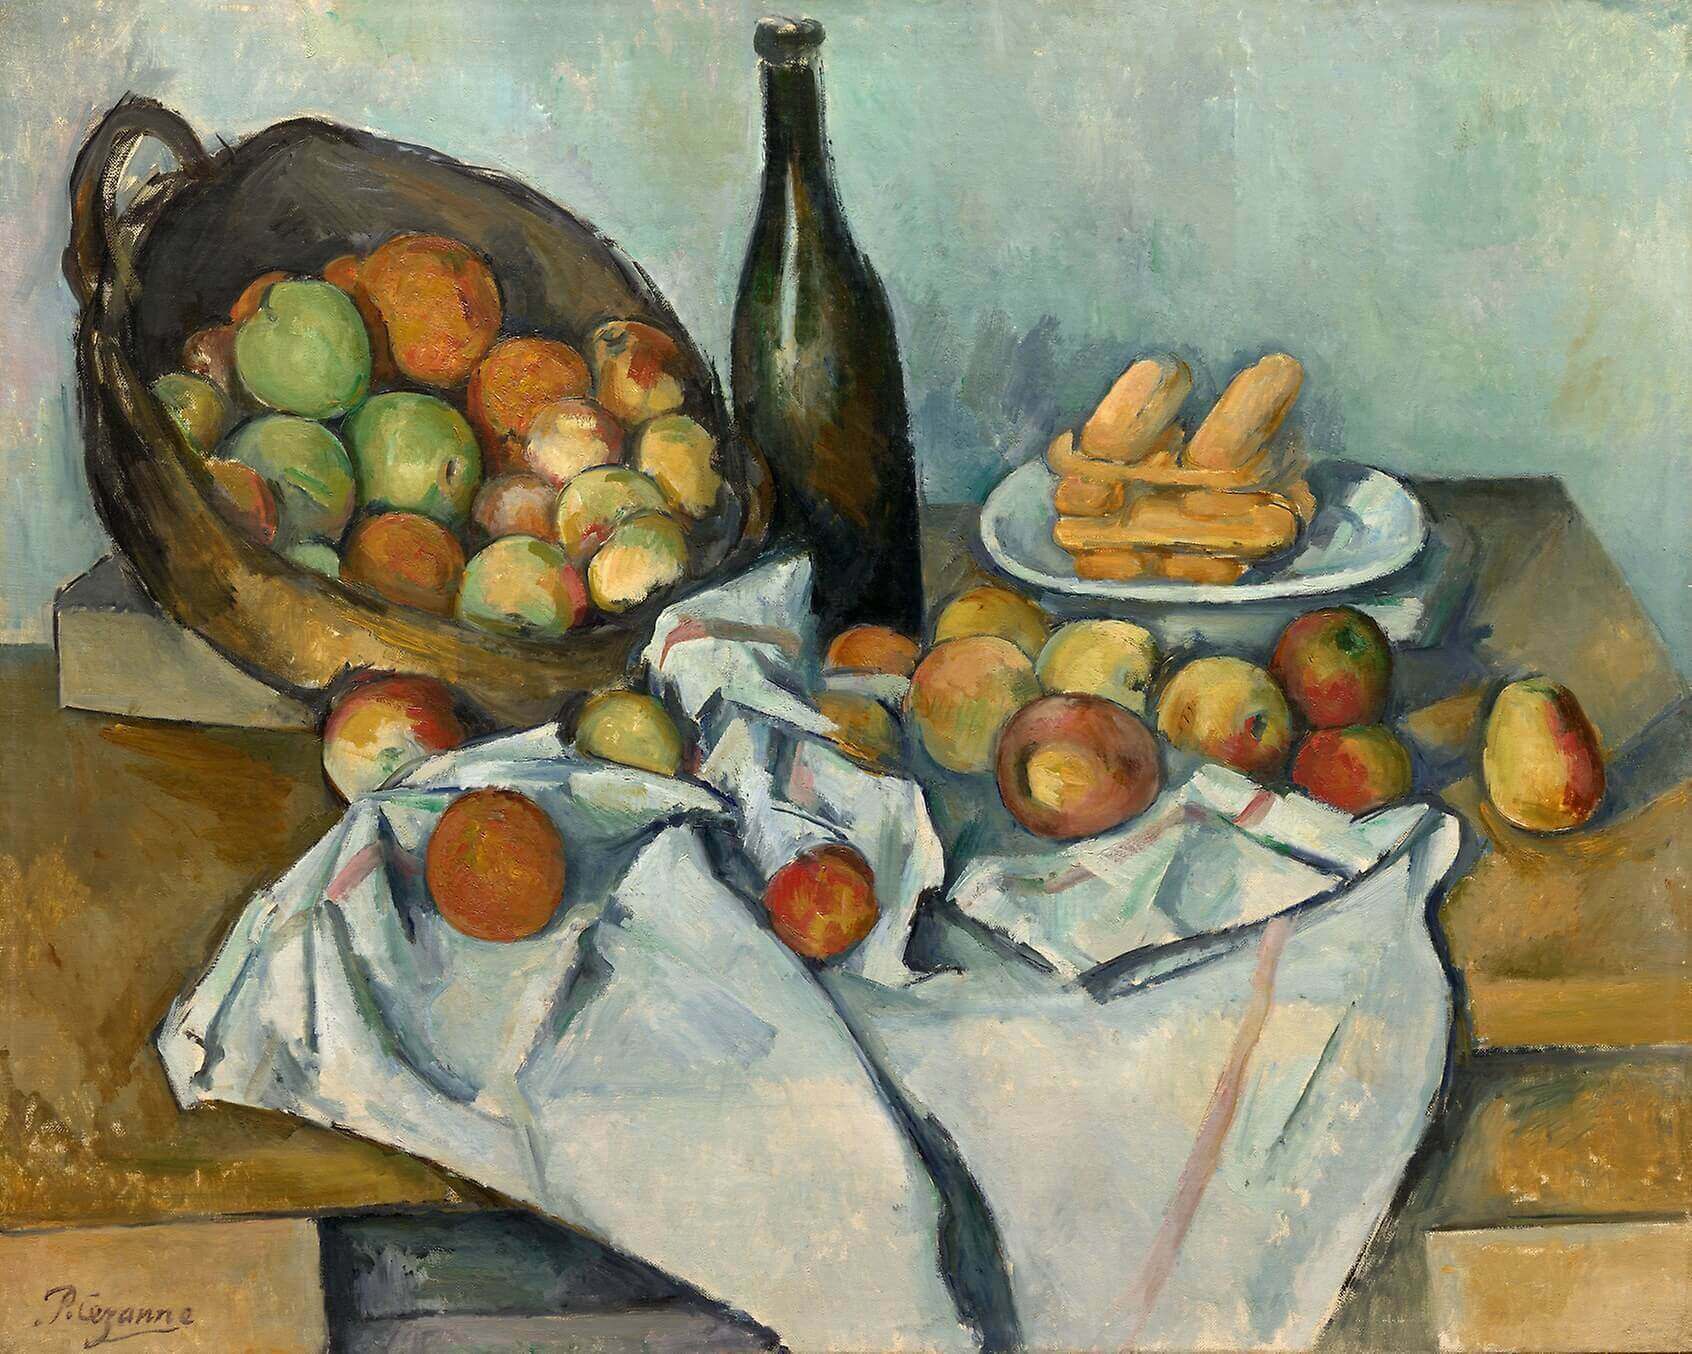 Paul Cézanne, The Basket of Apples, c. 1893 (Helen Birch Bartlett Memorial Collection, Art Institute of Chicago)